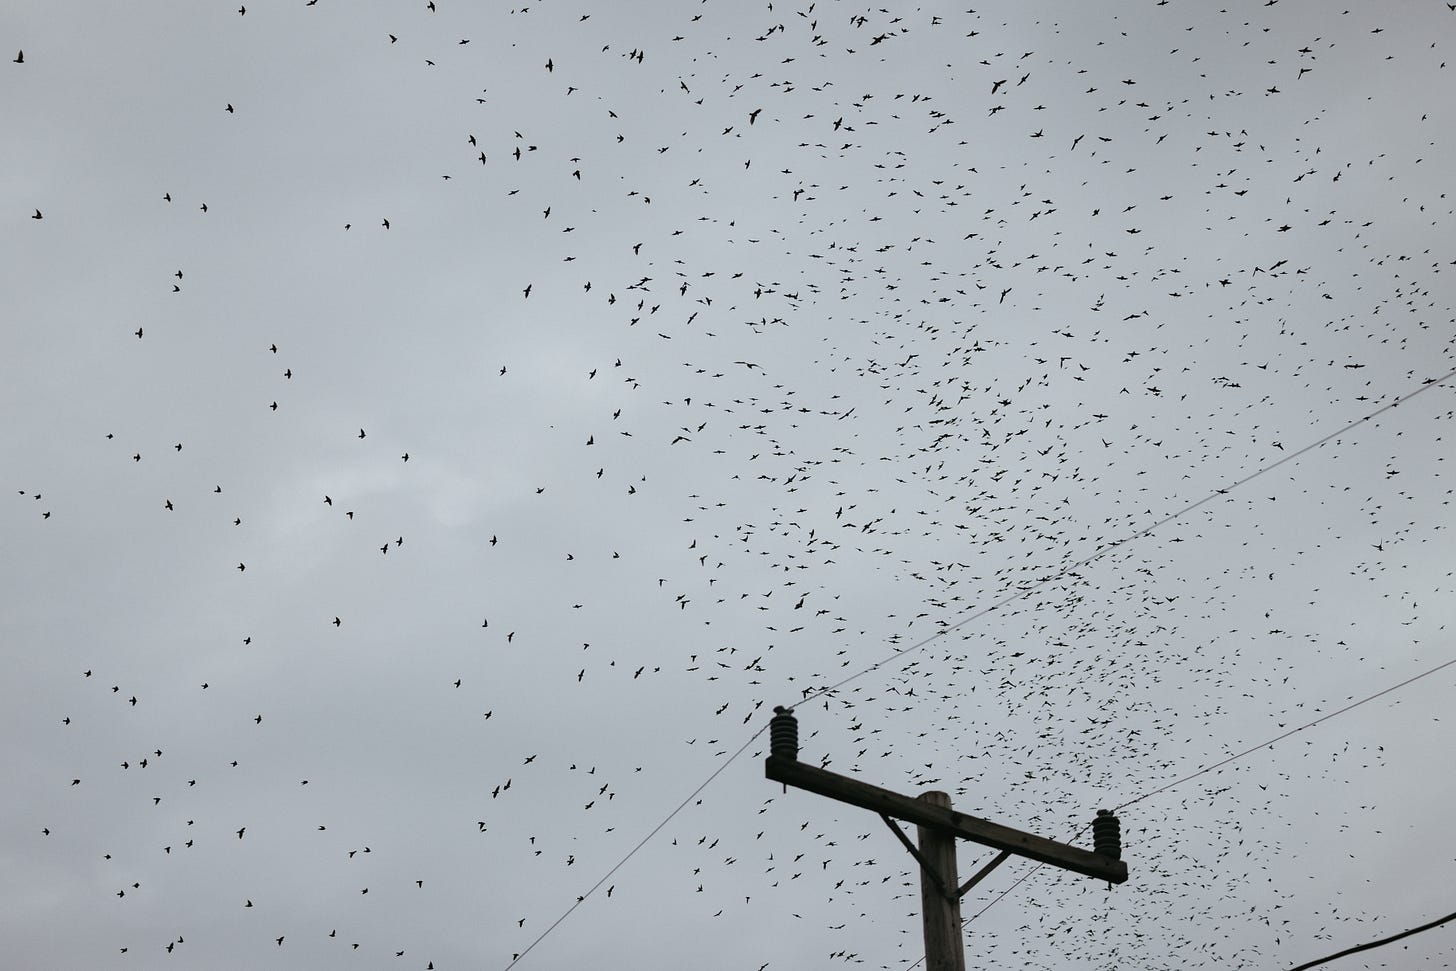 a huge number of birds flying over some power lines